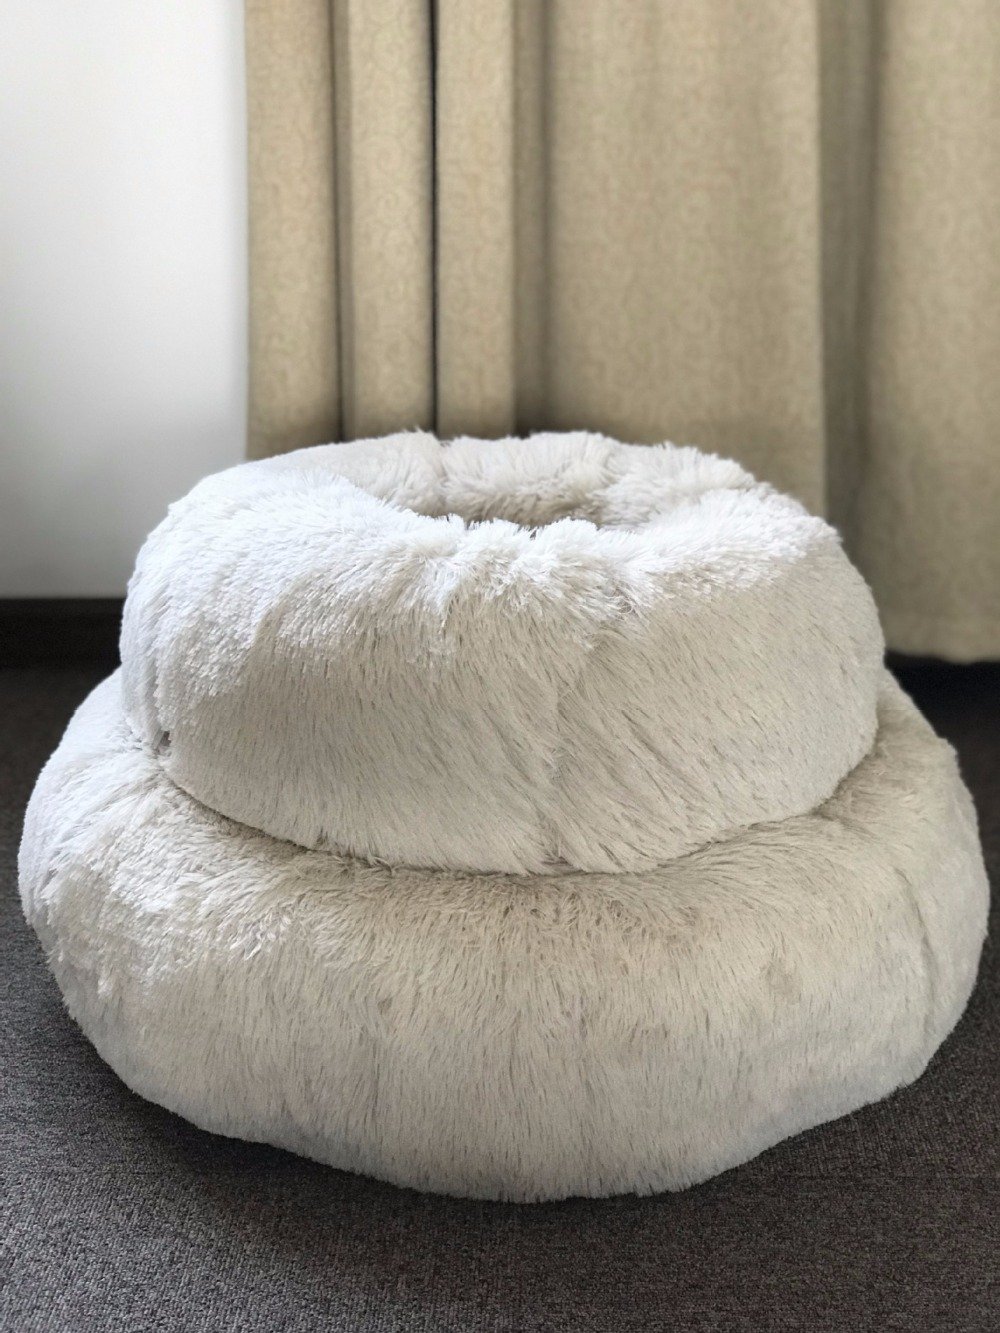 Teddy - Plush Calming Soft Pet Bed